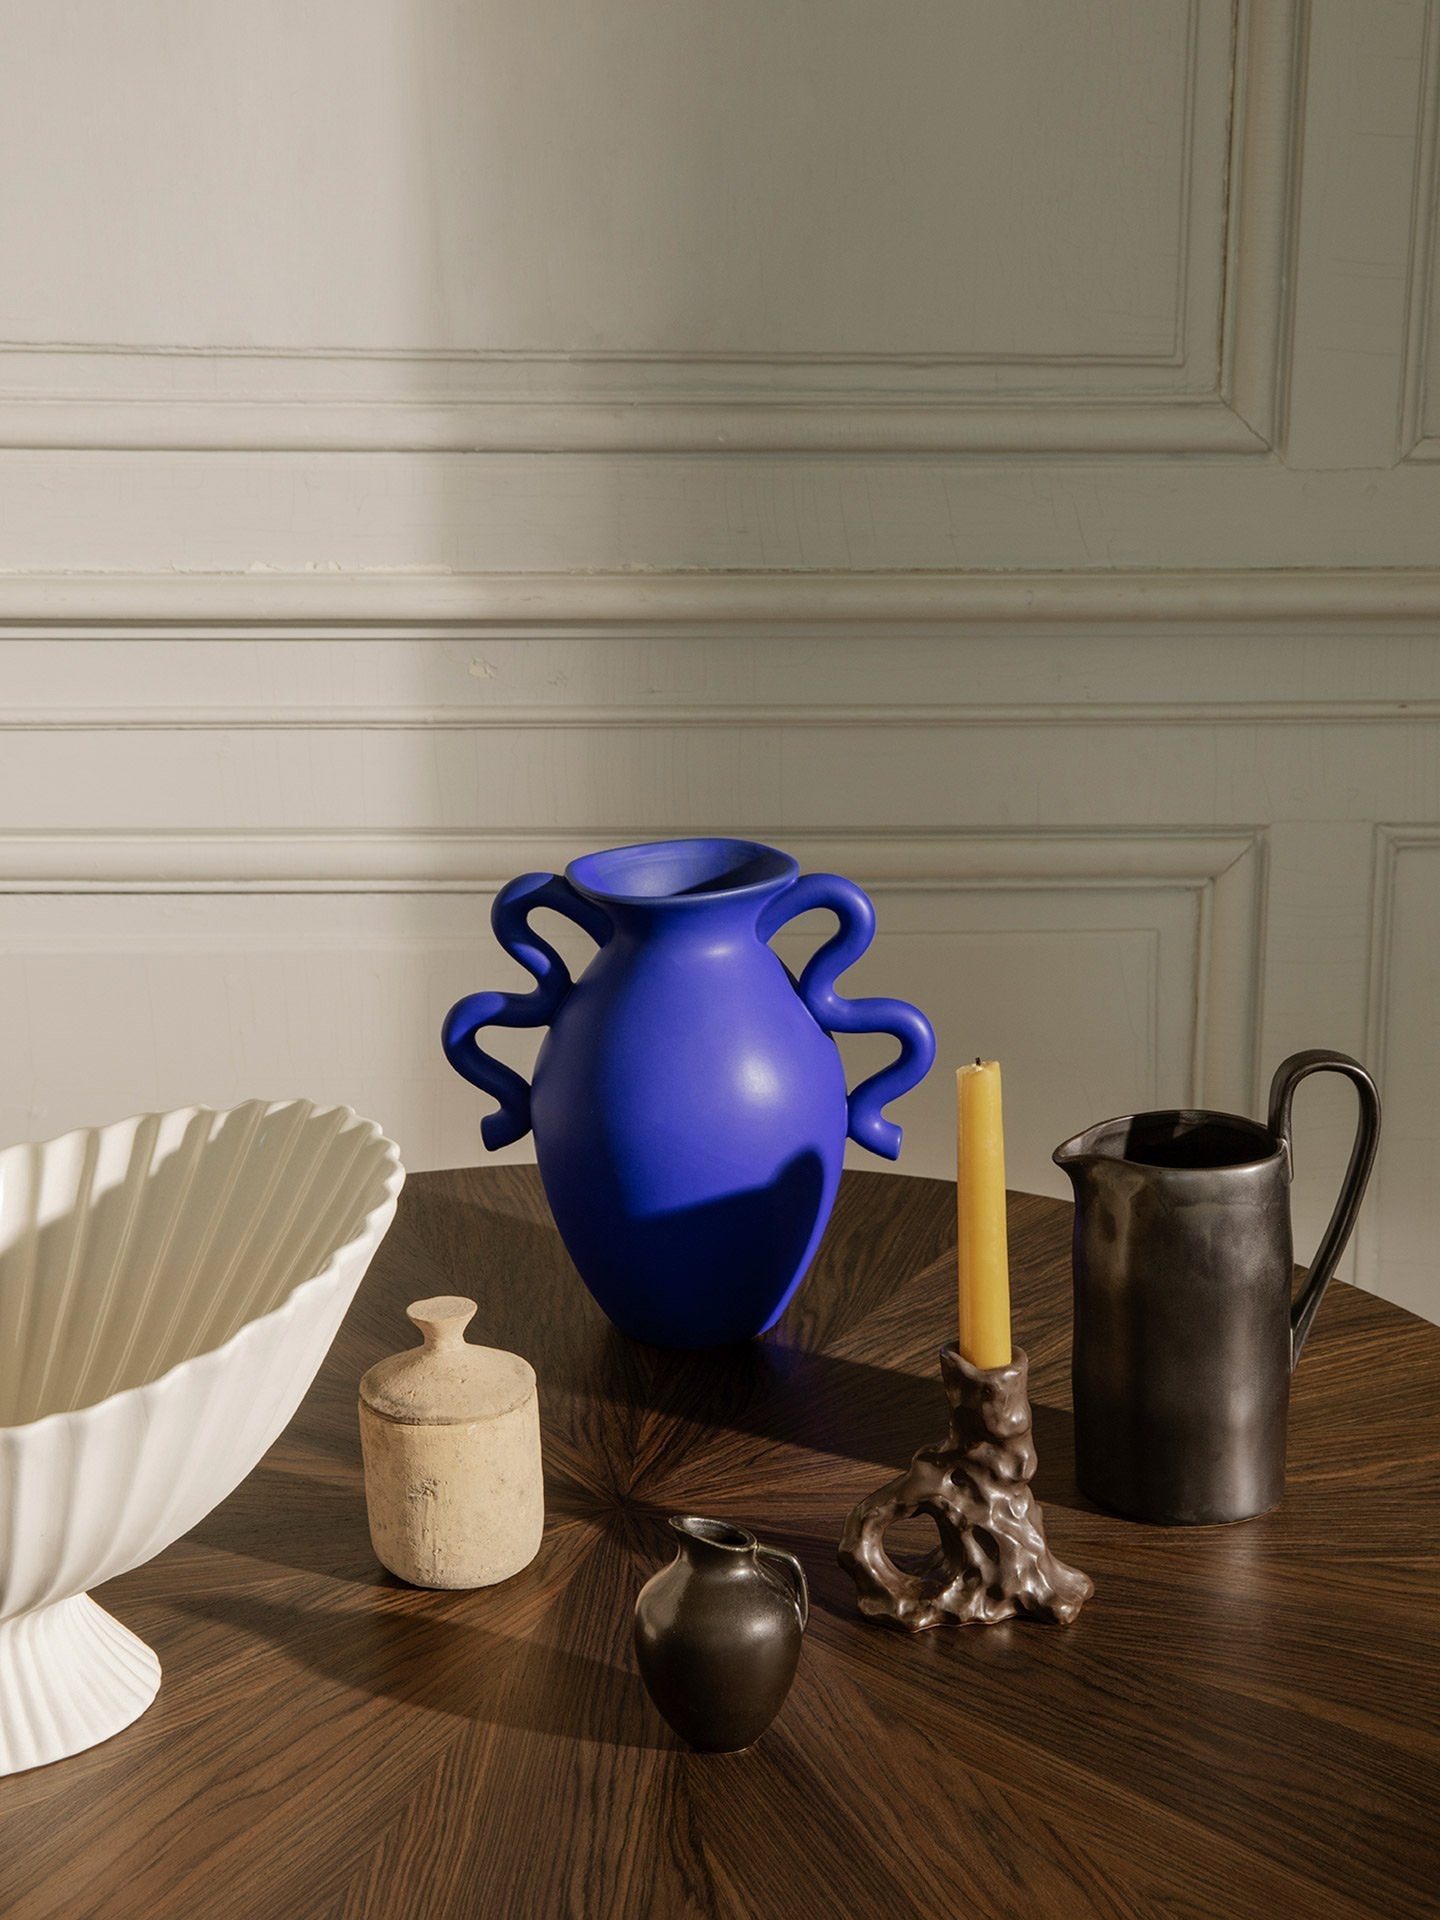 Verso Table Vase, Bright blue